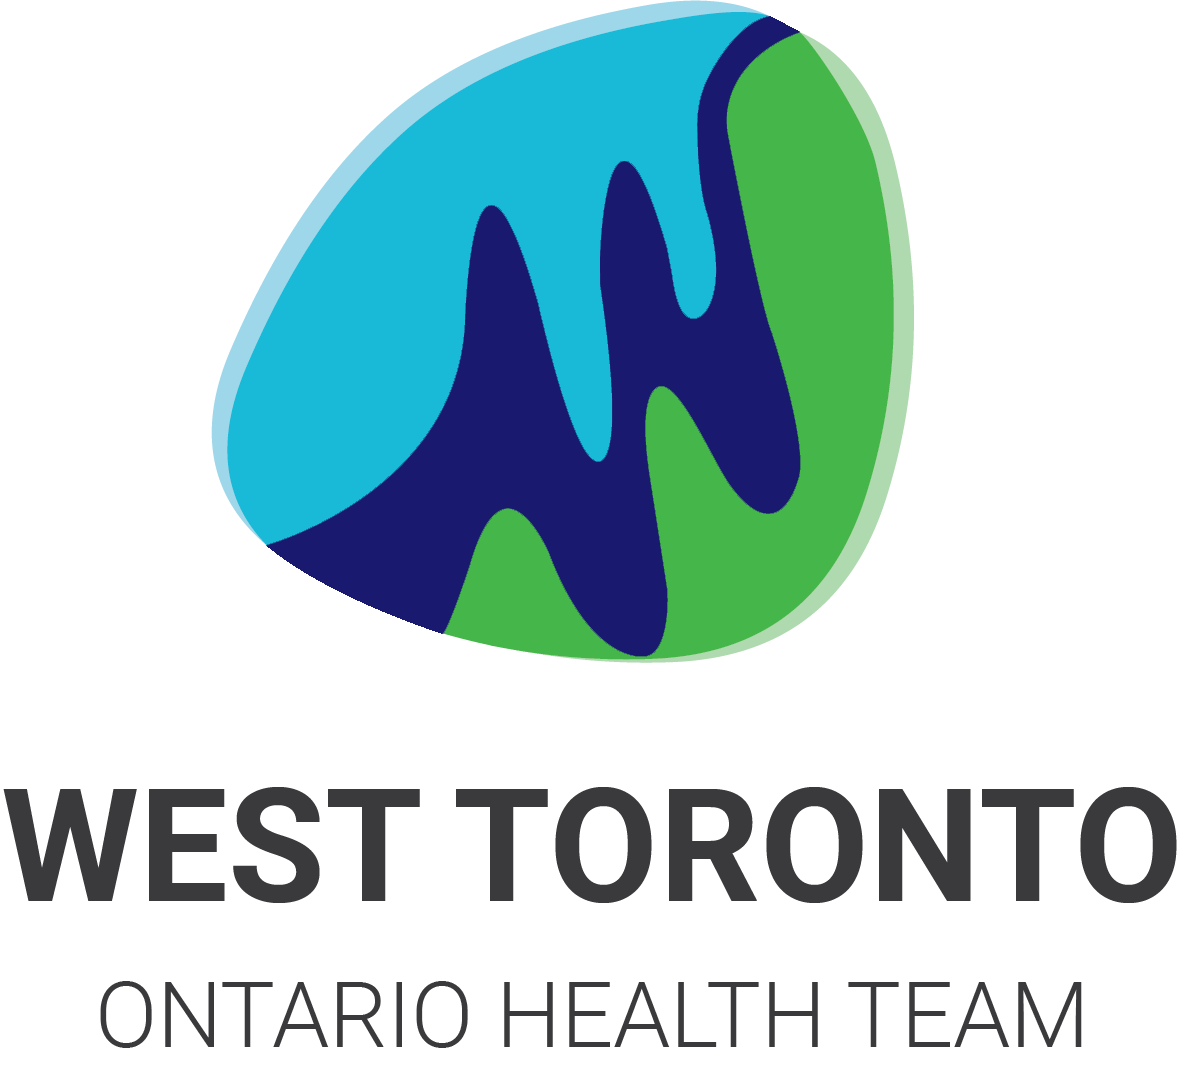 West Toronto Ontario Health Team (WTOHT)